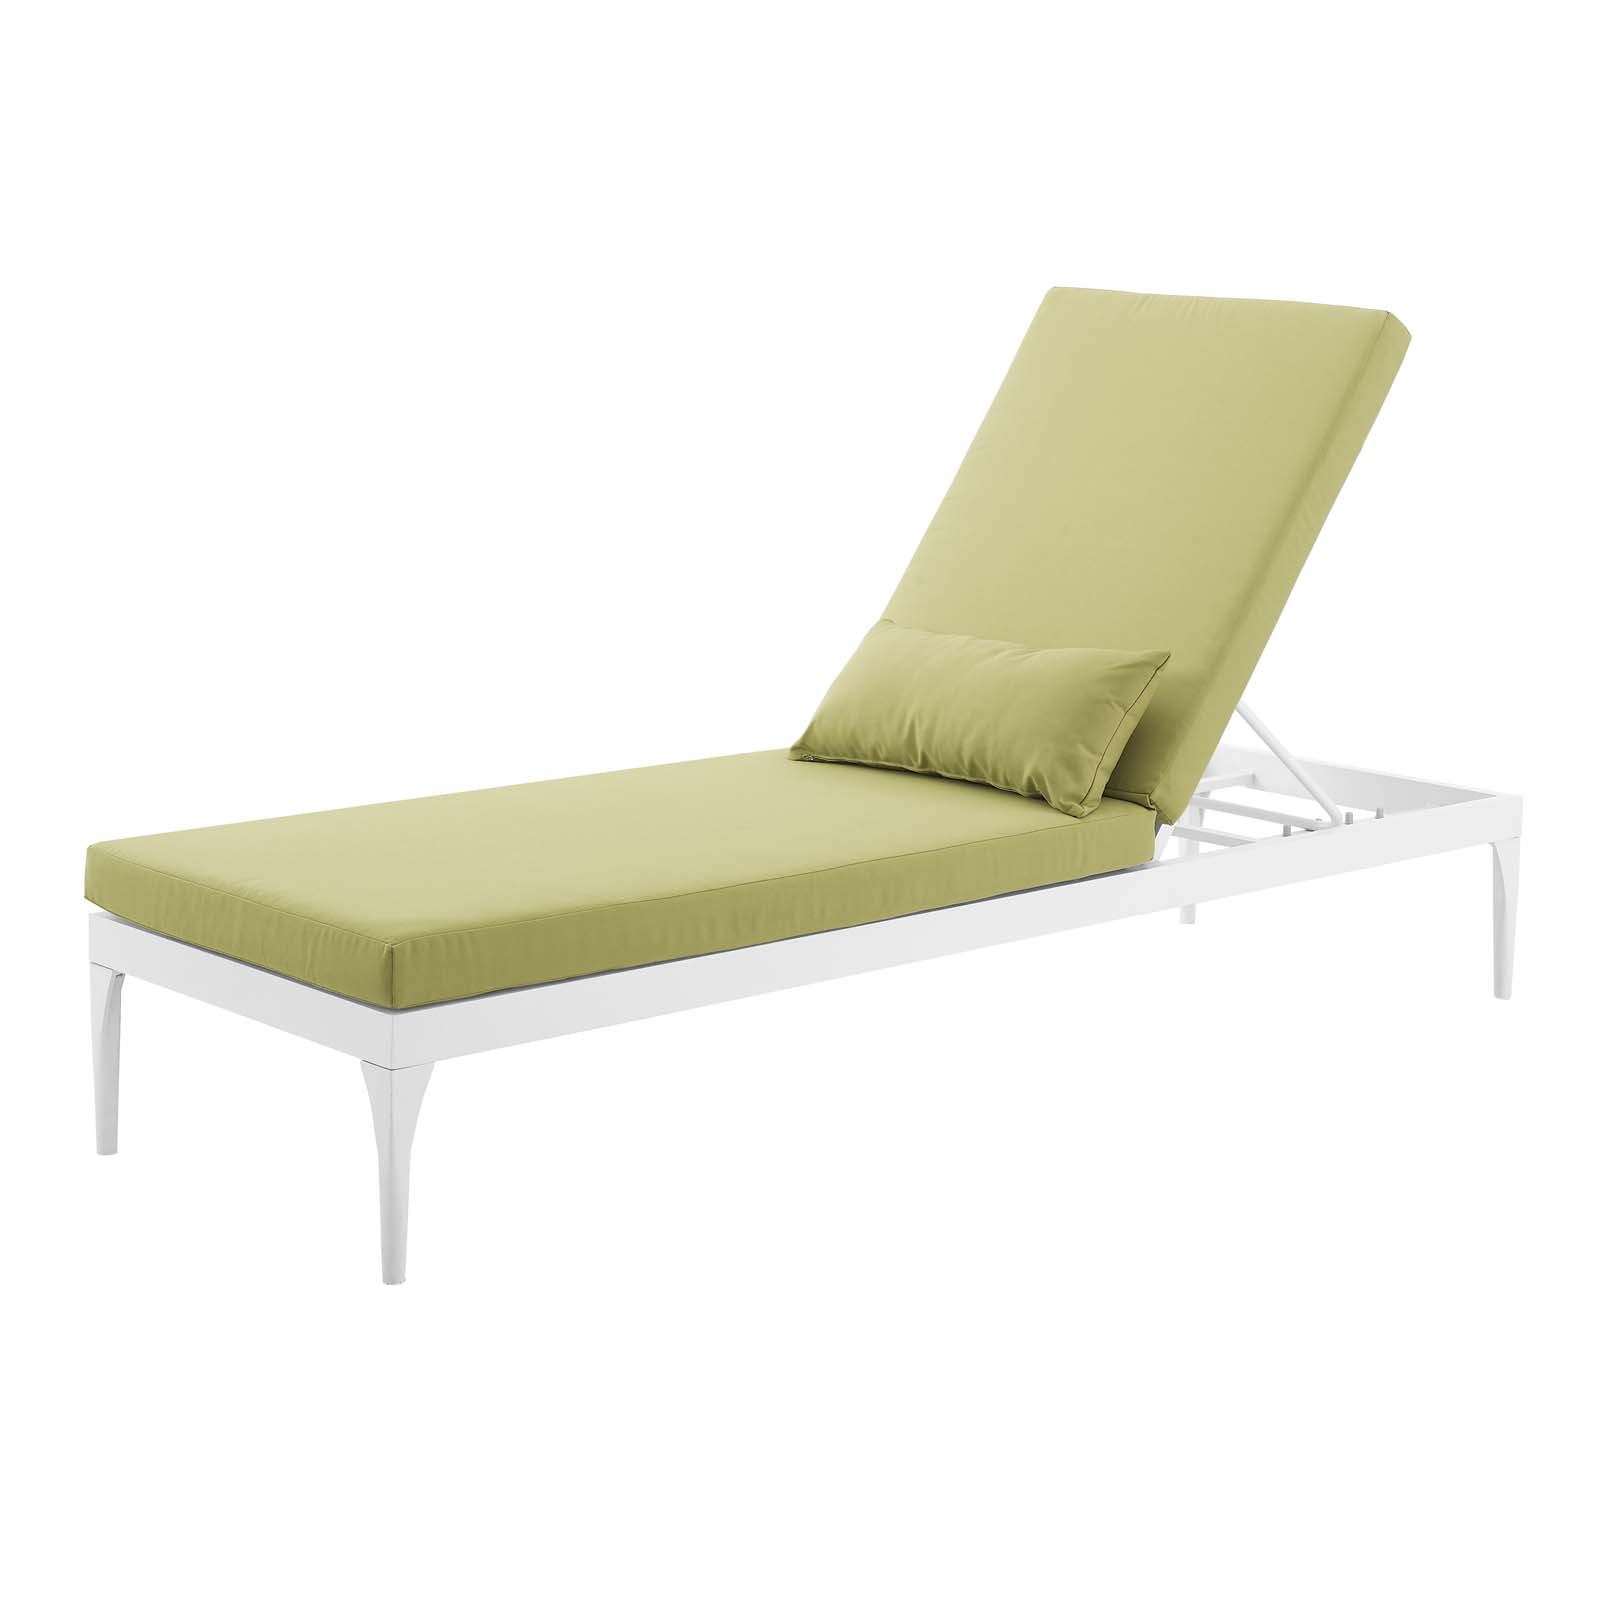 Modern Contemporary Urban Design Outdoor Patio Balcony Garden Furniture Lounge Chair Chaise, Fabric Aluminium, Green White - image 1 of 7